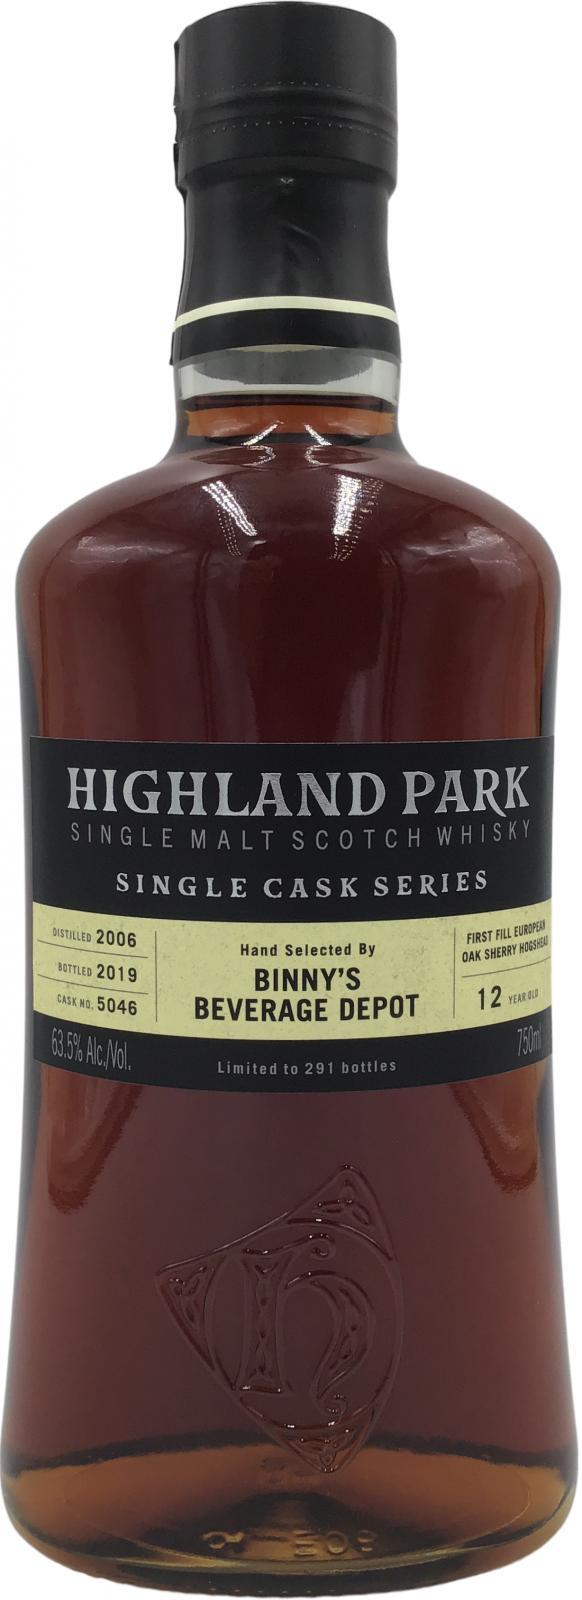 Highland Park 2006 Single Cask Series #5046 Binny's Beverage Depot 63.5% 750ml